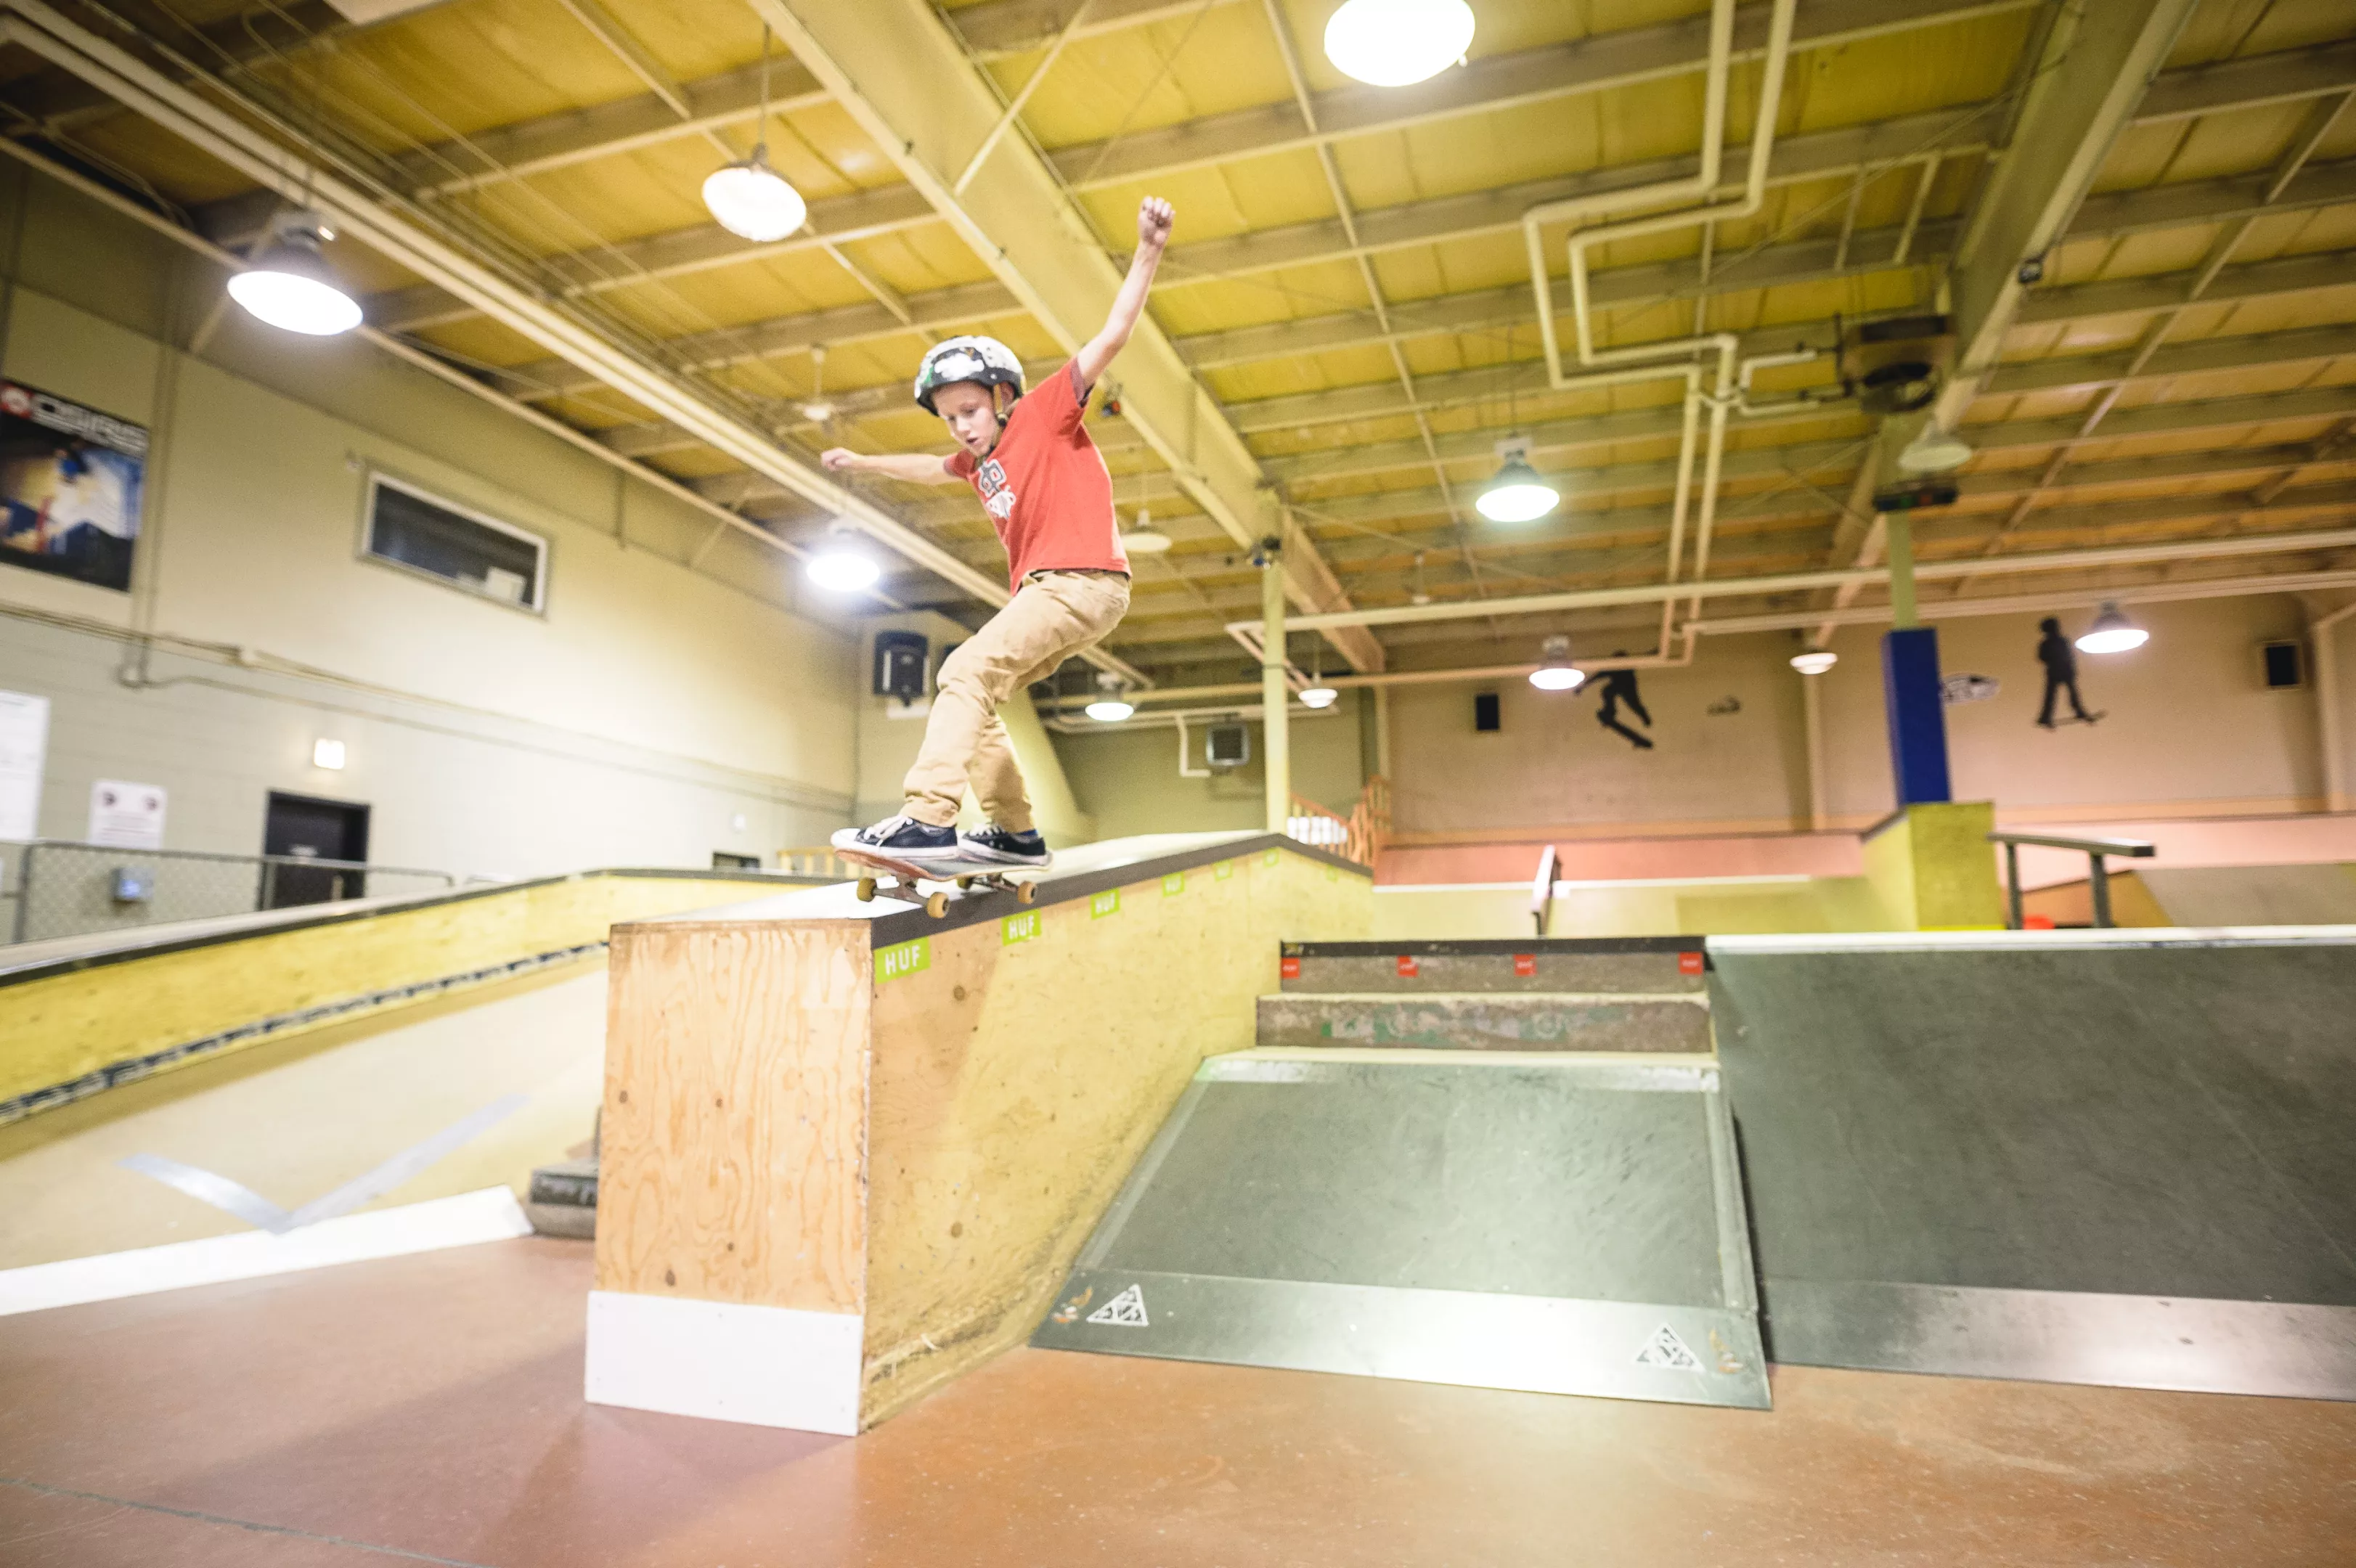 Youth on skateboard at an indoor skatepark